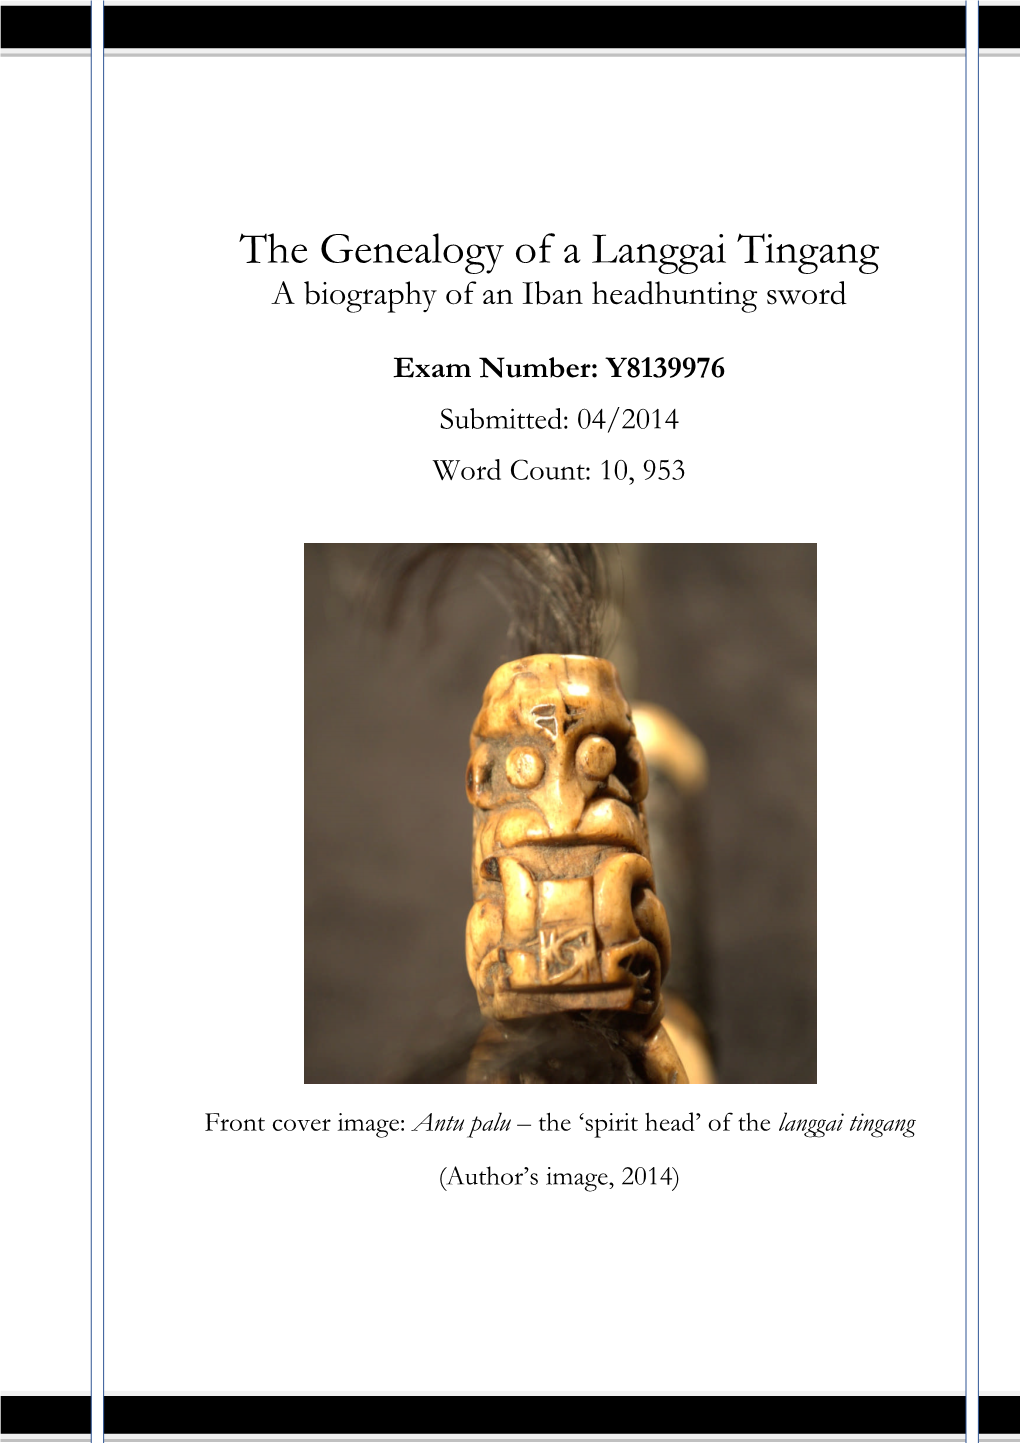 The Genealogy of a Langgai Tingang a Biography of an Iban Headhunting Sword